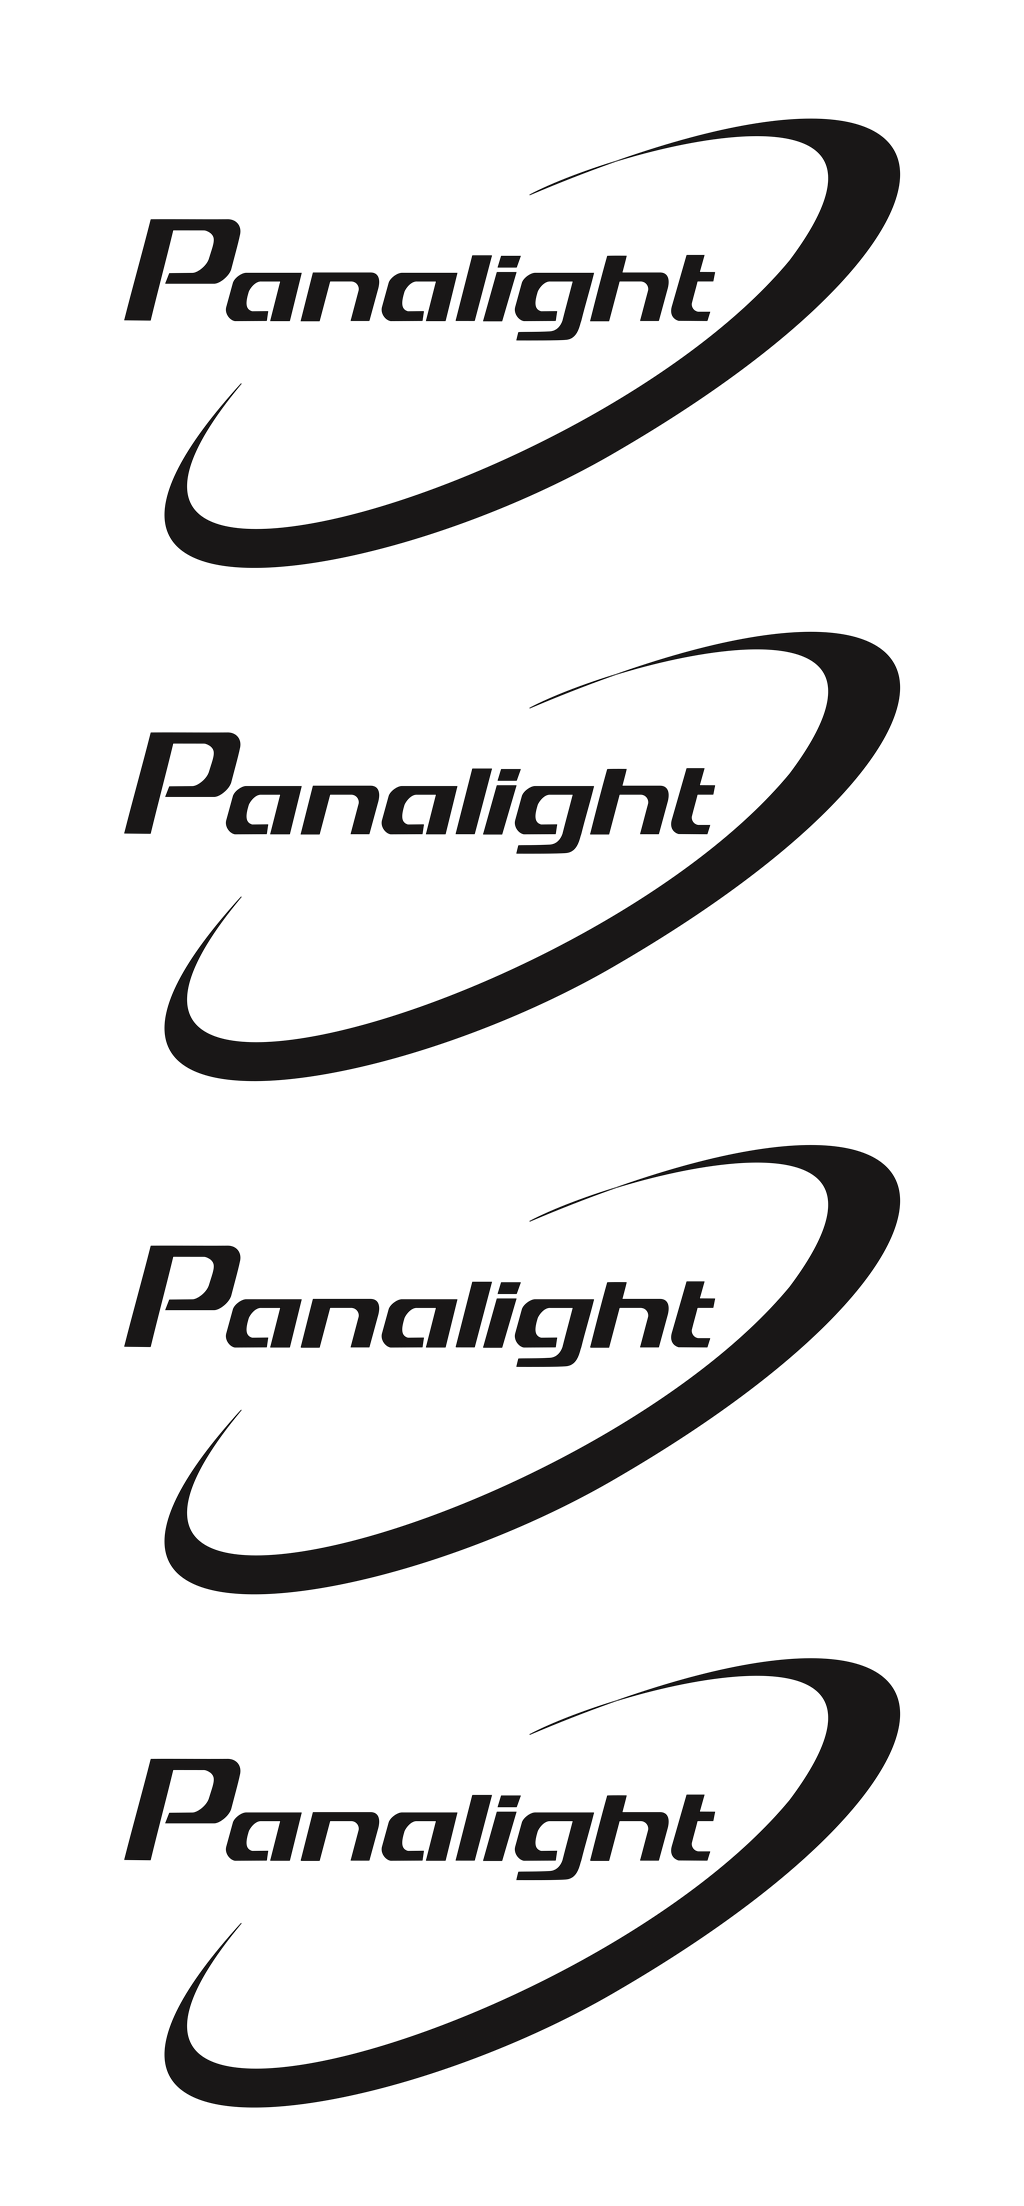 Panalight logotype, transparent .png, medium, large